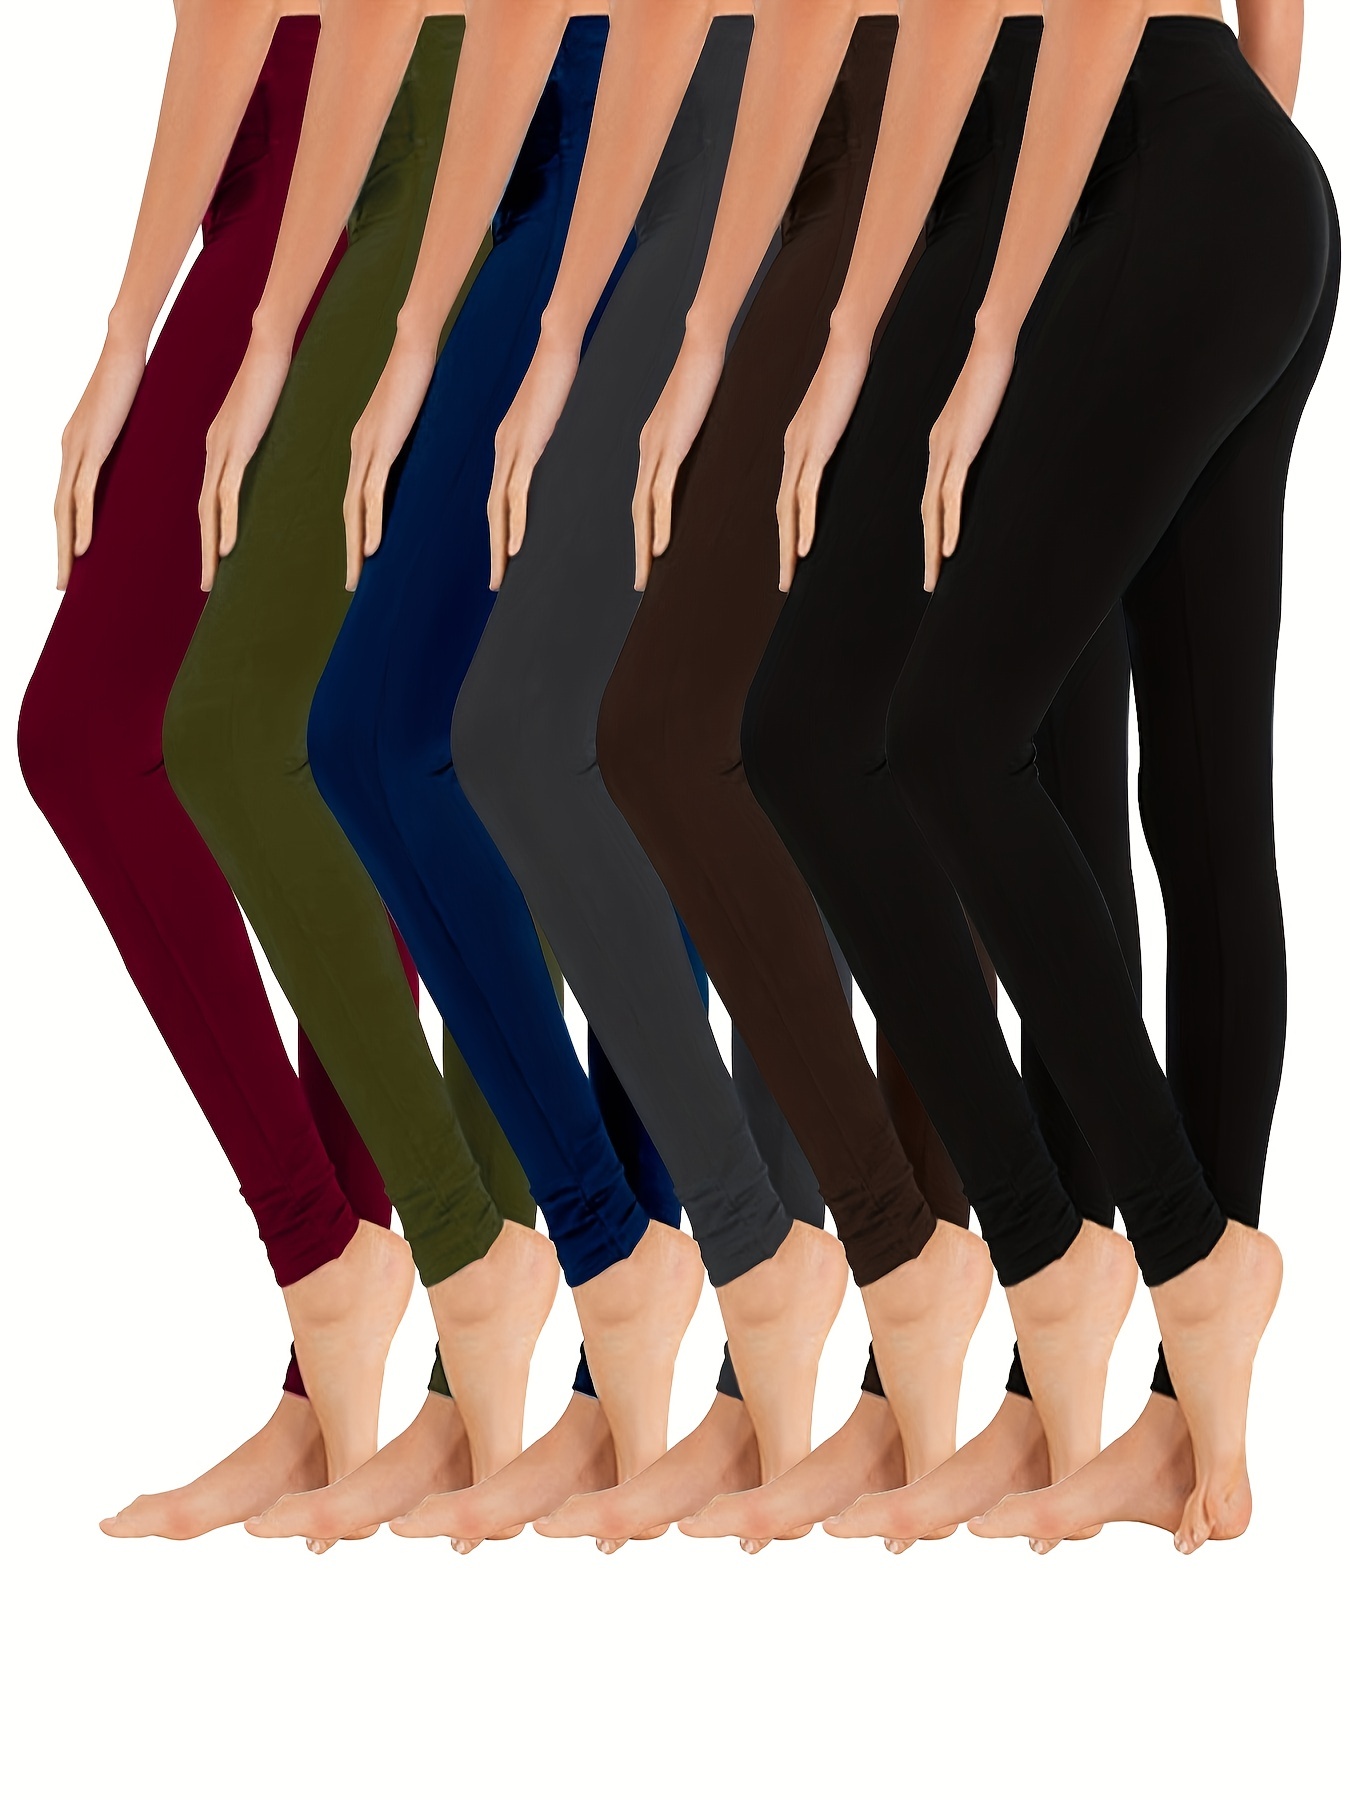 SYRINX High Waisted Leggings for Women - Soft Athletic Tummy